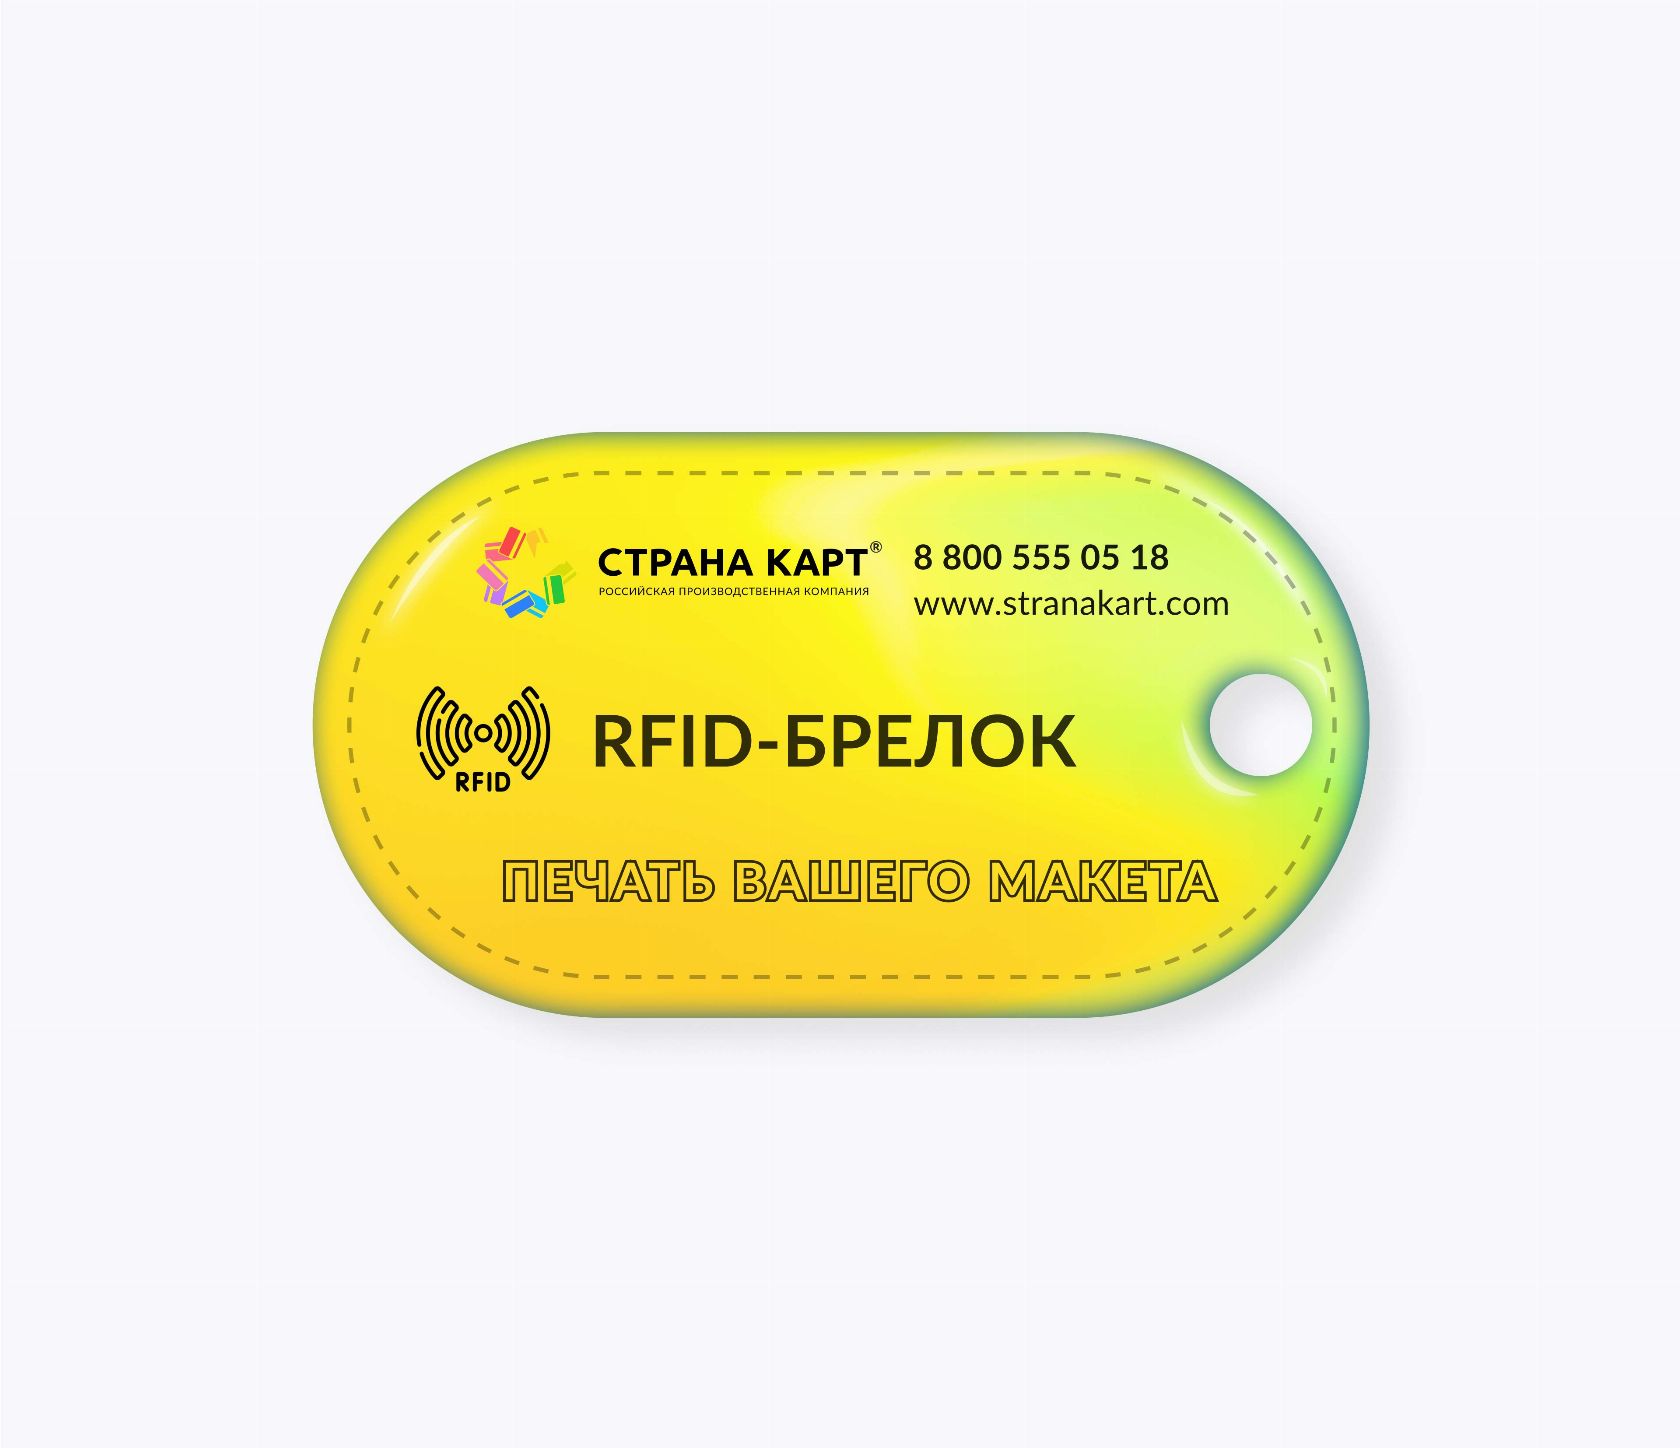 Овальные RFID-брелоки NEOKEY® с чипом NXP MIFARE ID 4 byte nUID RFID-брелоки NEOKEY® с чипом NXP MIFARE ID 4 byte nUID и вашим логотипом